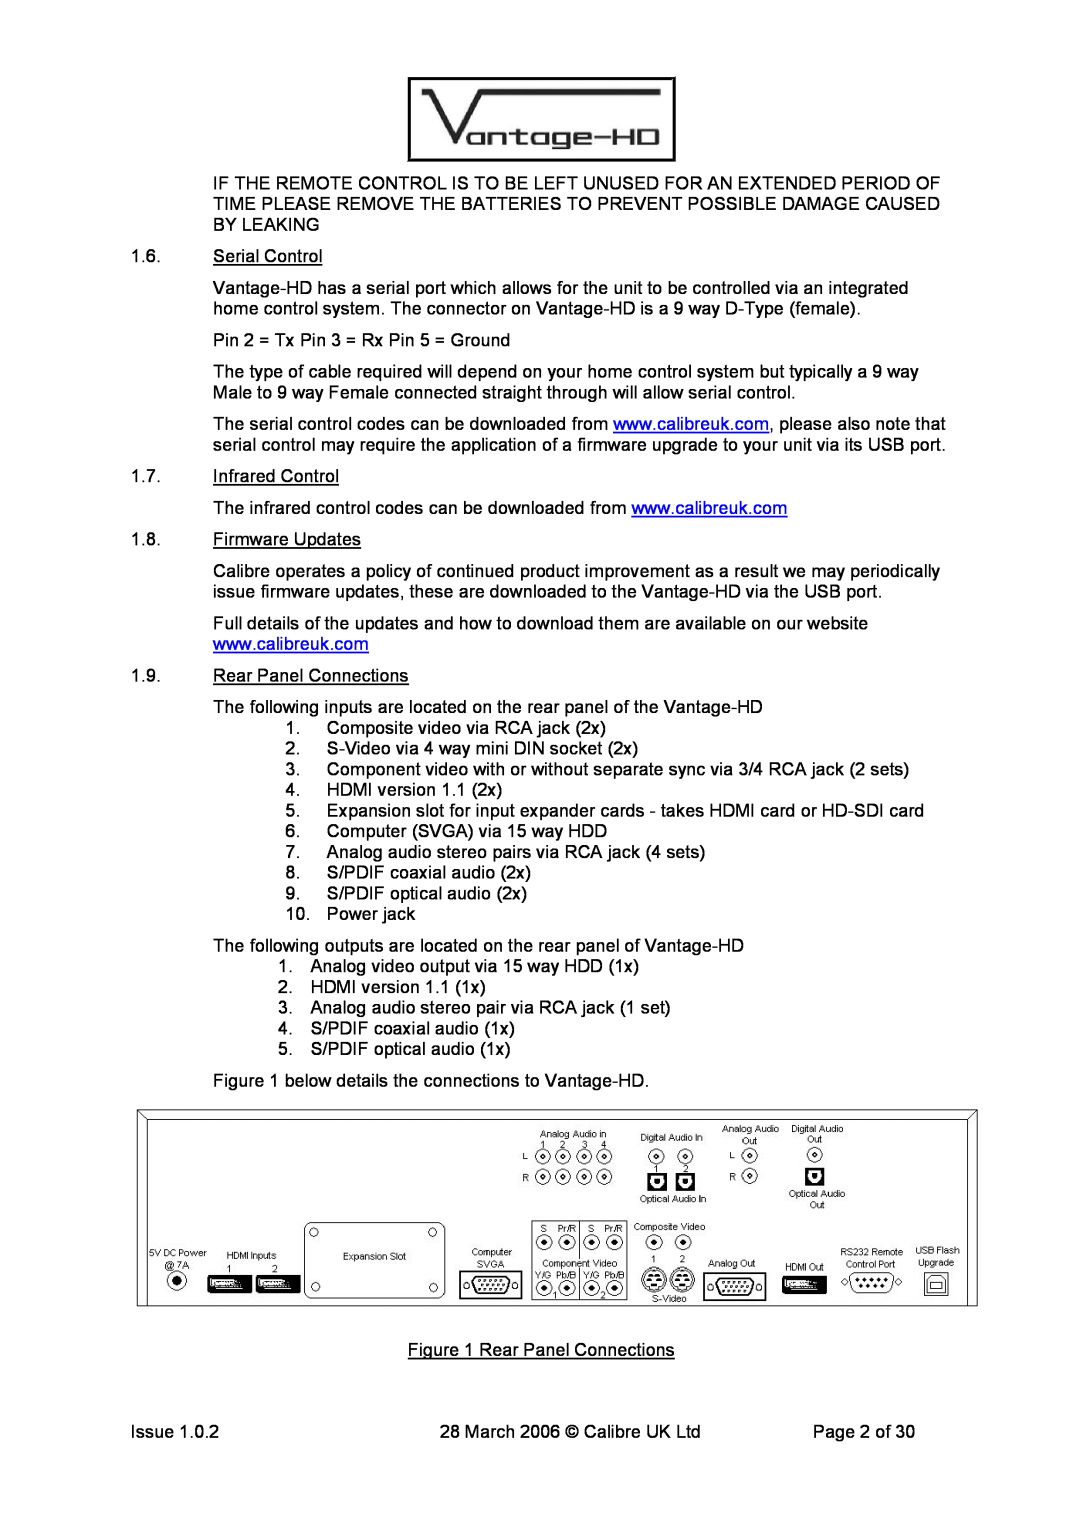 Calibre UK VANTAGE-HD Serial Control, Pin 2 = Tx Pin 3 = Rx Pin 5 = Ground, Infrared Control, Firmware Updates, Power jack 